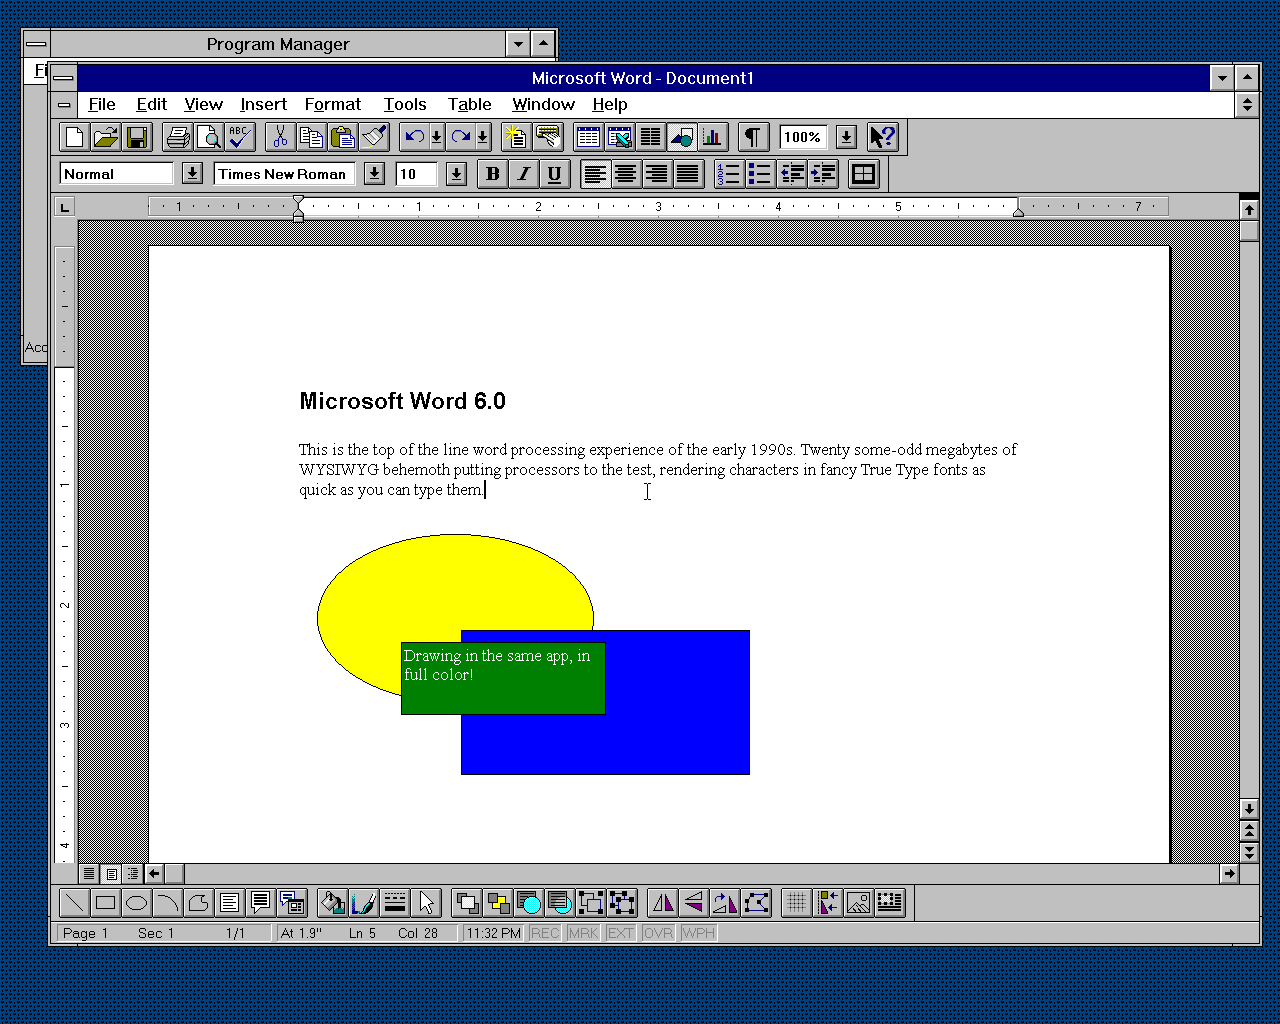 Microsoft Word 6.0